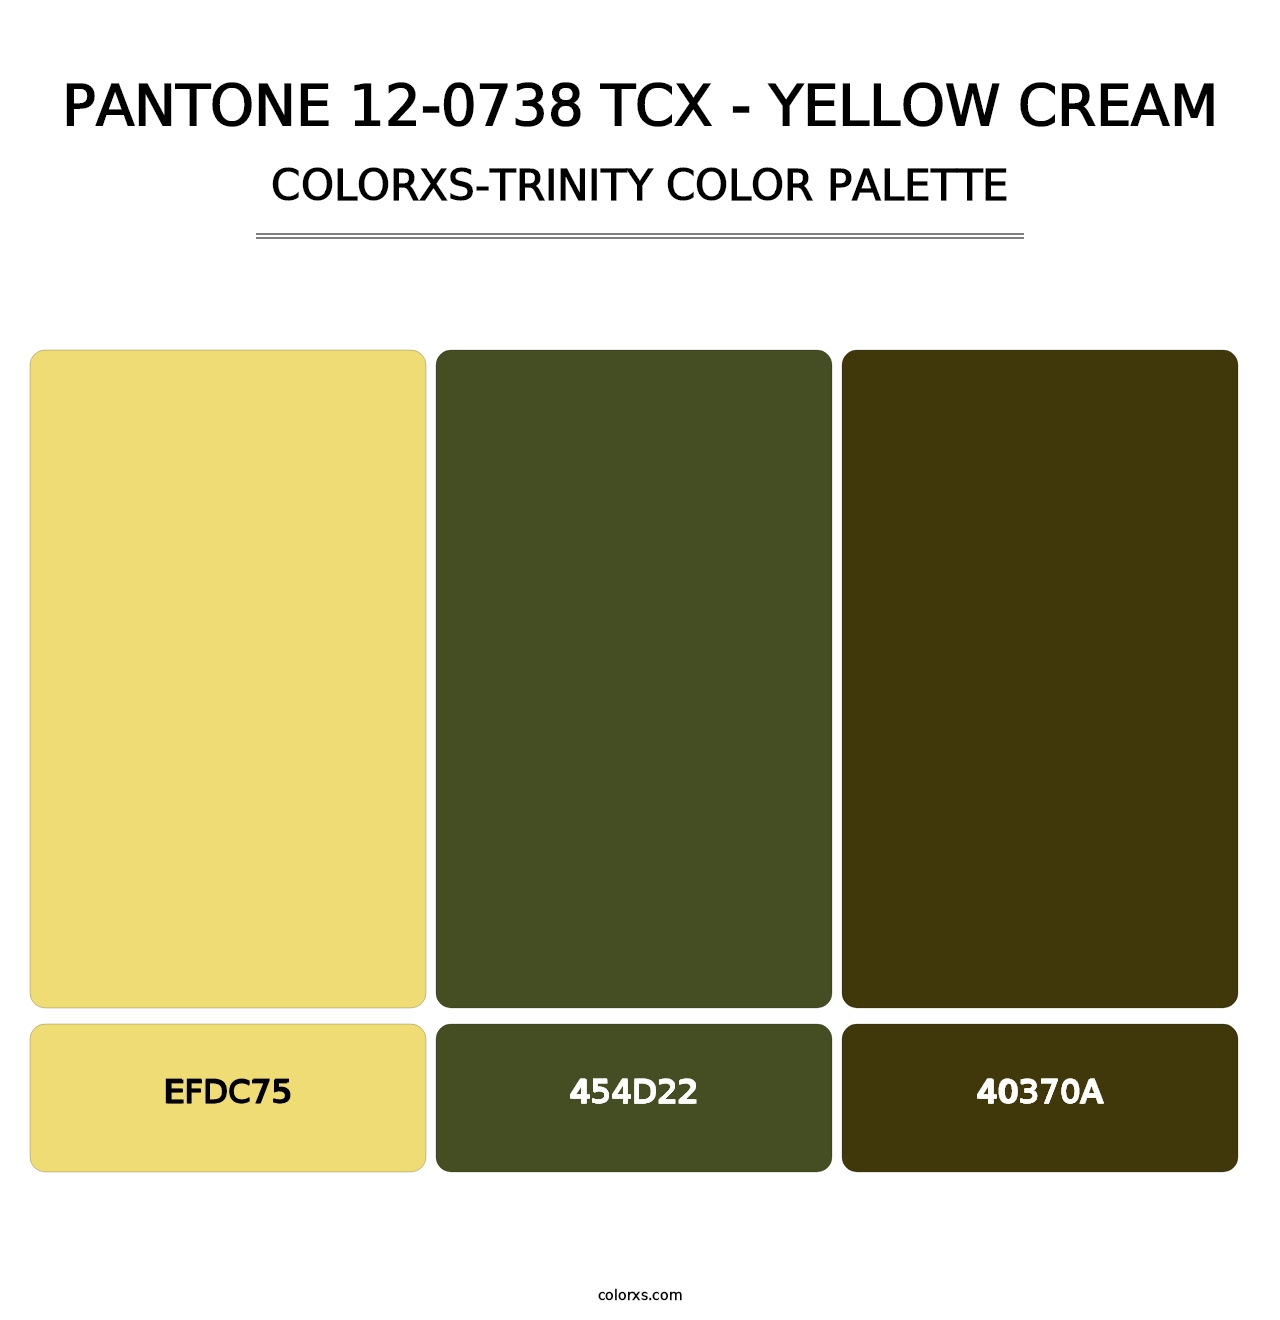 PANTONE 12-0738 TCX - Yellow Cream - Colorxs Trinity Palette